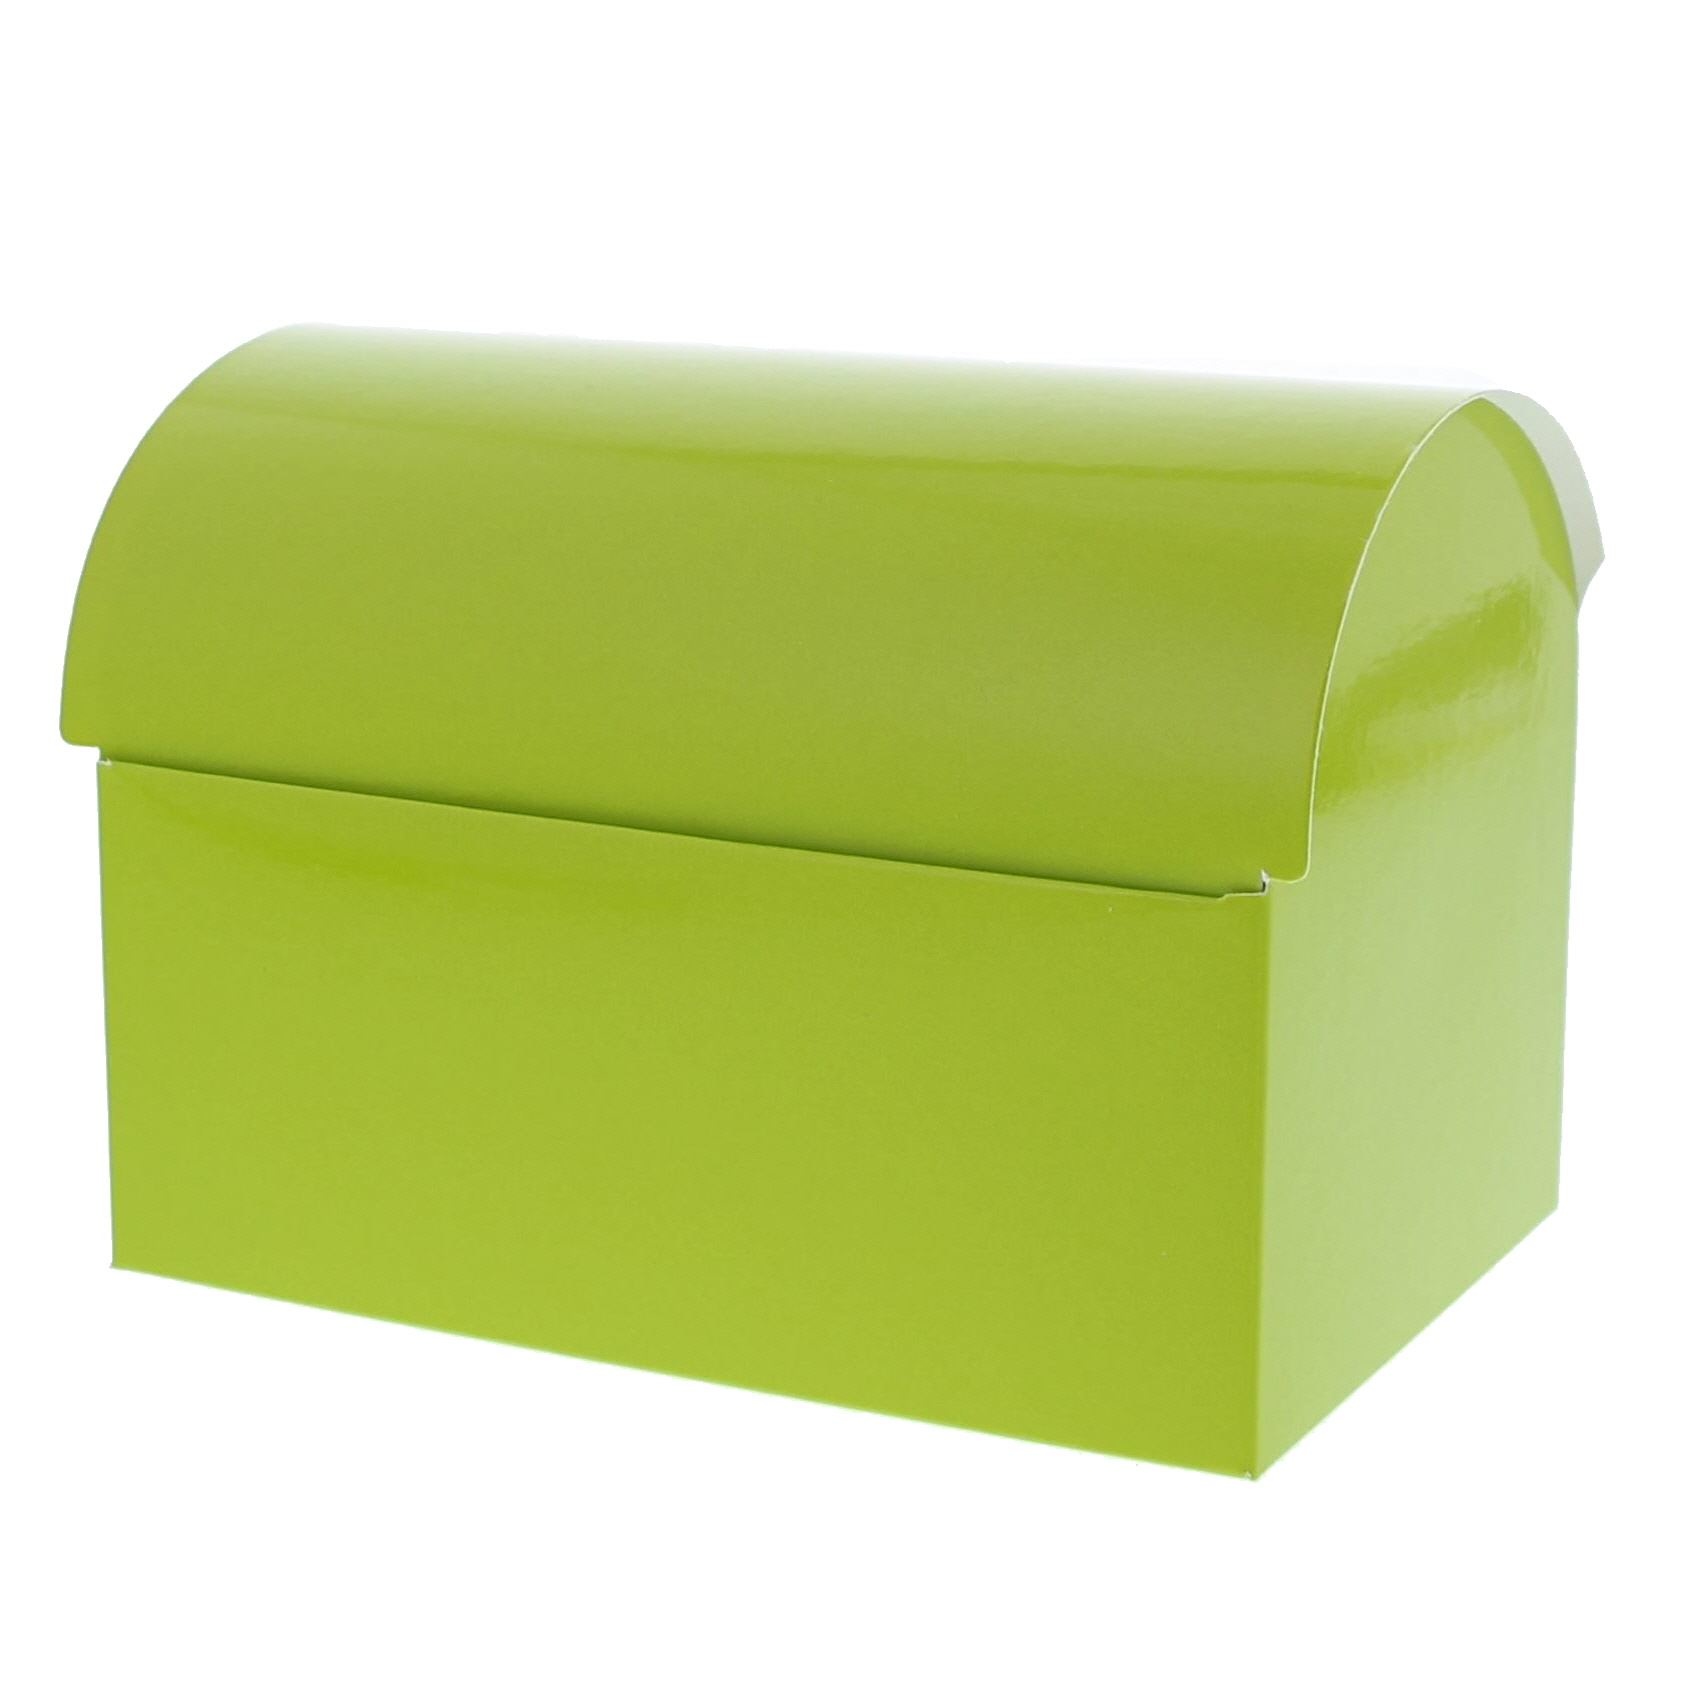 Treasure box - 500 gr. - 25 pieces - Green